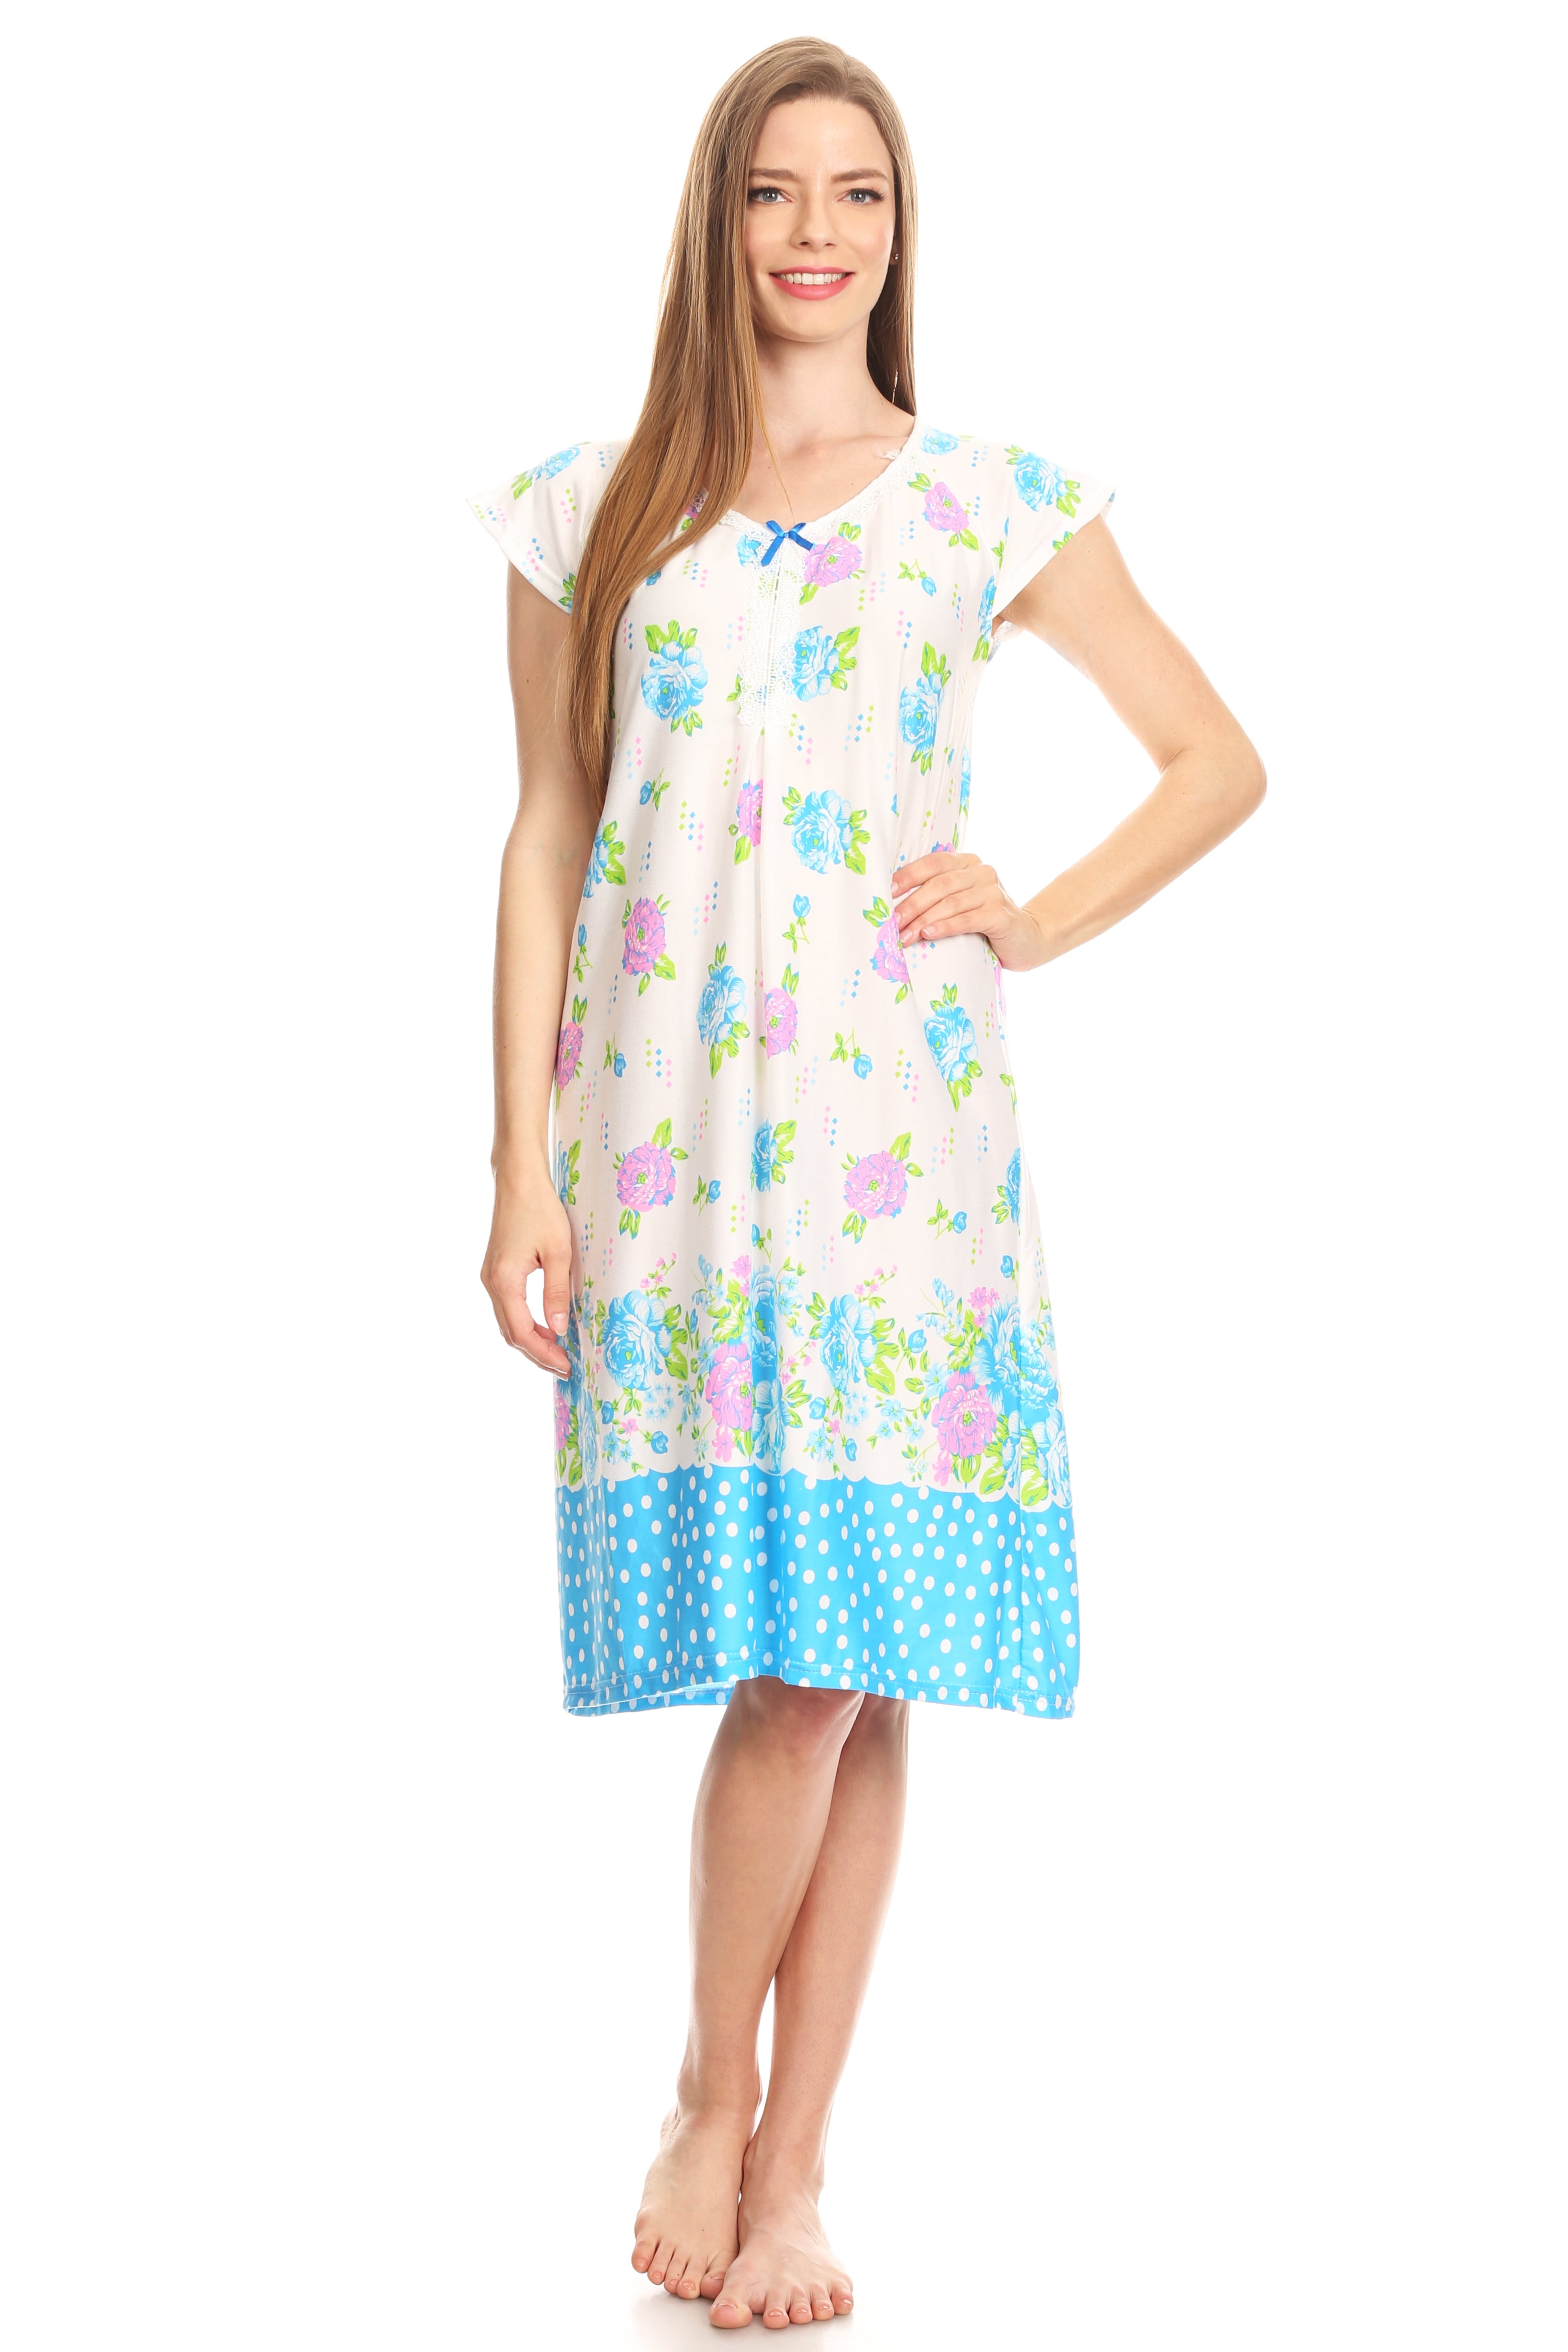 809 Womens Nightgown Sleepwear Pajamas - Woman Sleeveless Sleep Dress Nightshirt Blue L